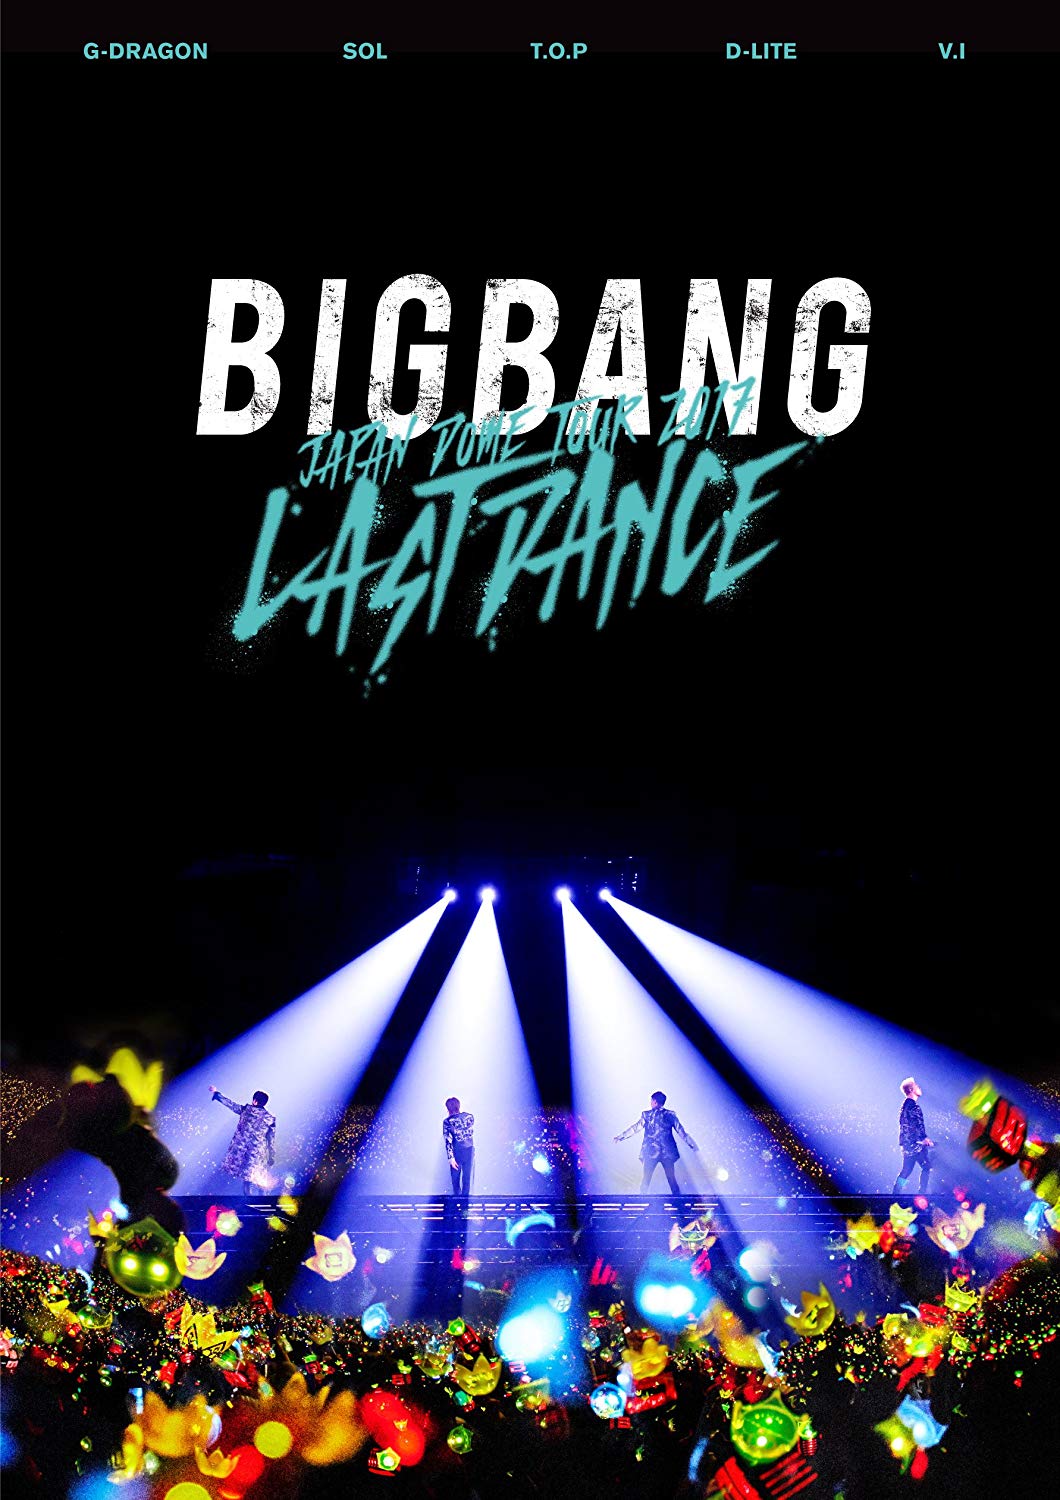 Bigbang G Dragon King Of K Pop としてシーンに起こした革命 強さと繊細さの両立がキーに Real Sound リアルサウンド